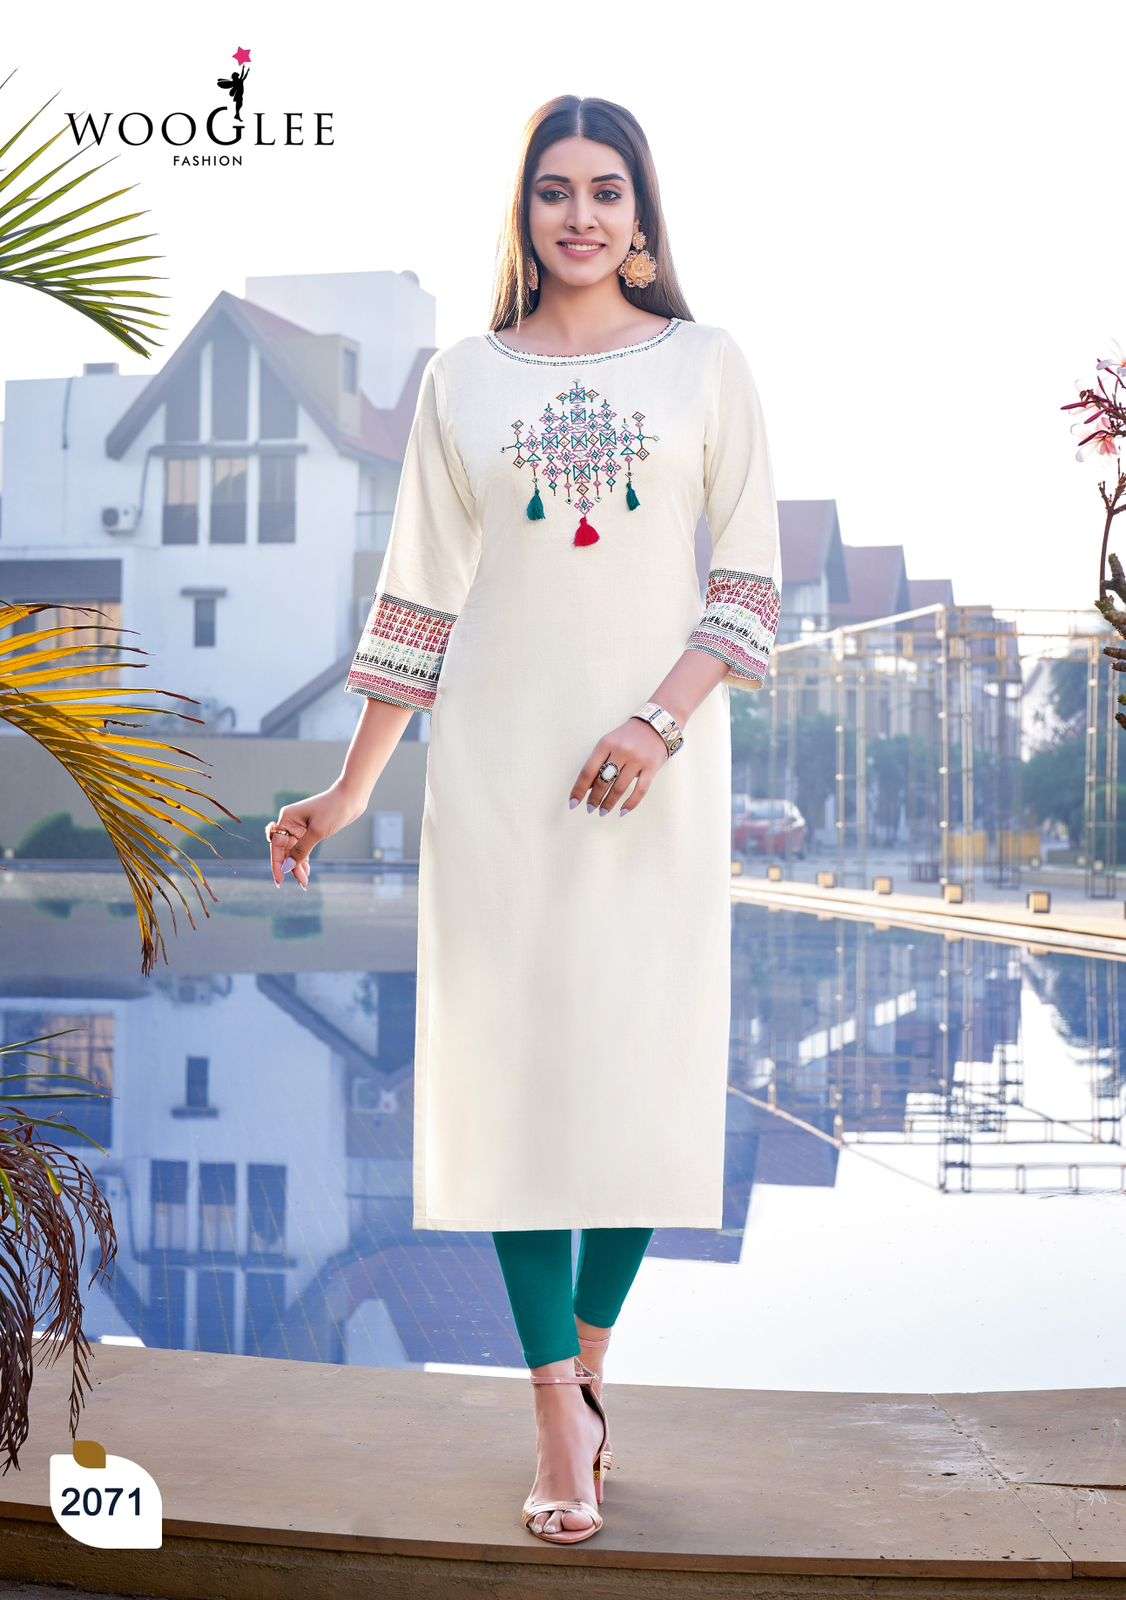 wooglee fashion barbella vol-10 2066-2071 series rayon designer kurtis wholesale supplier surat 